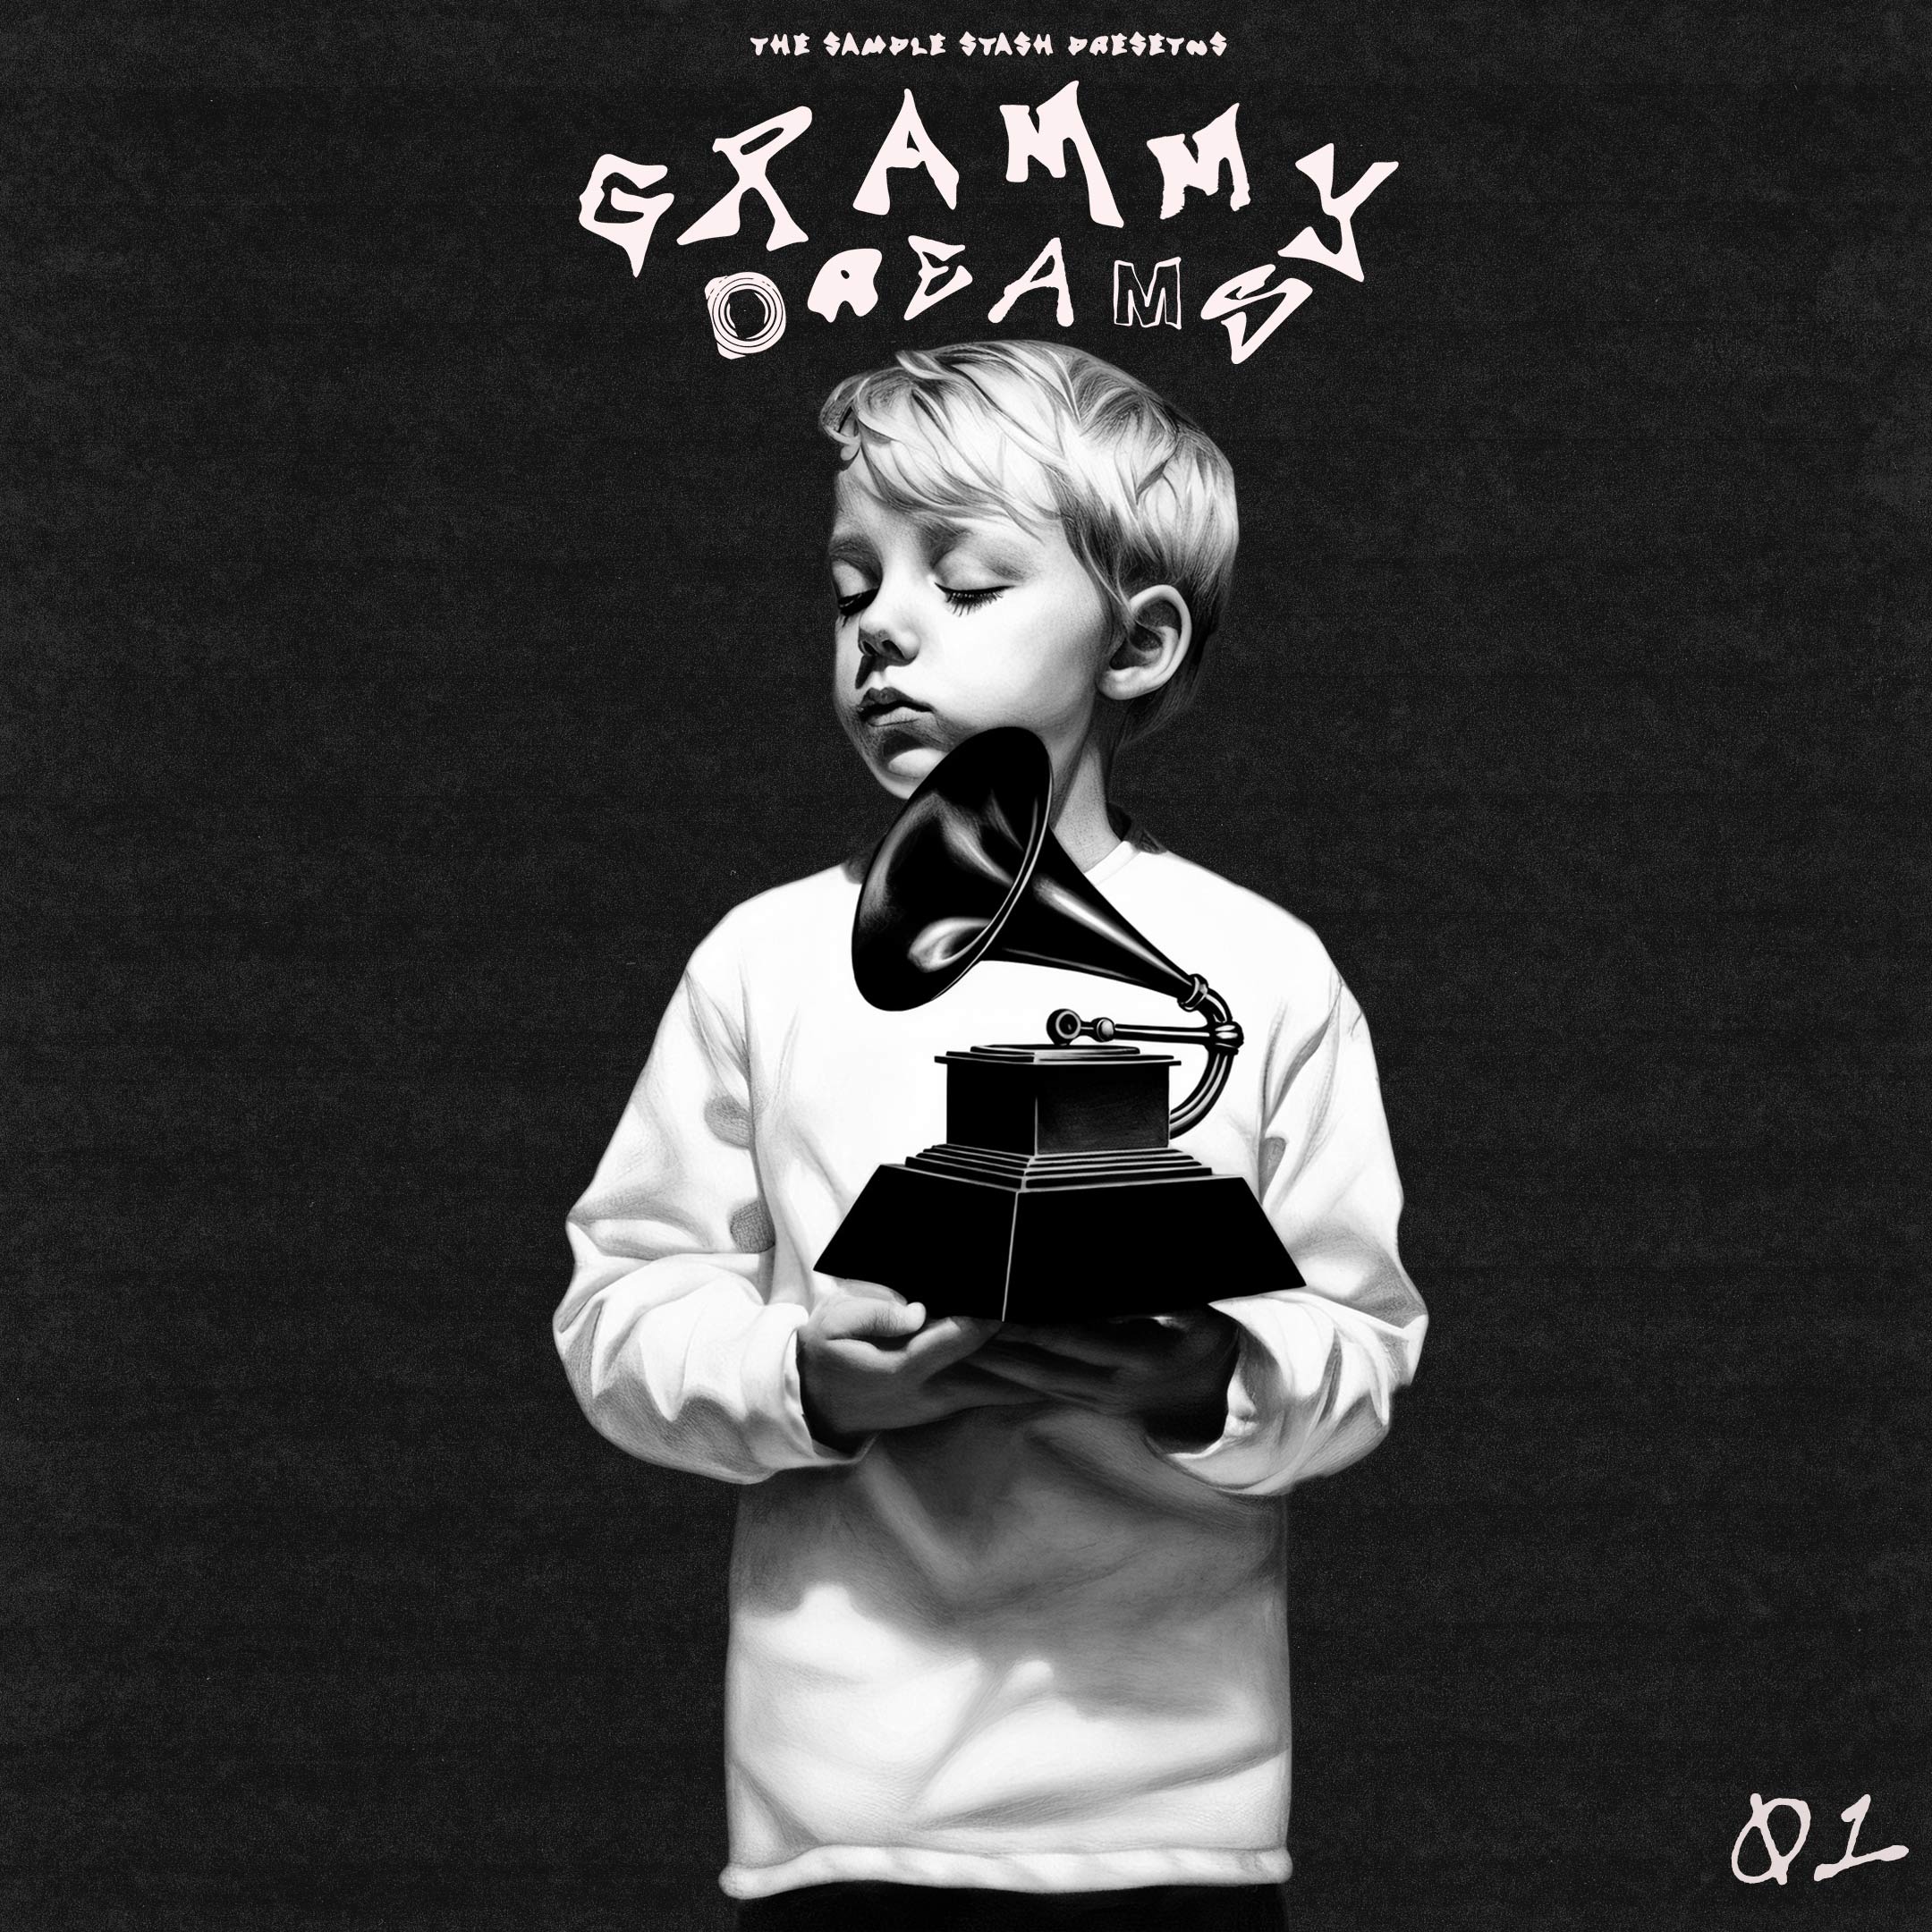 Grammy Dreams - Sample Plug